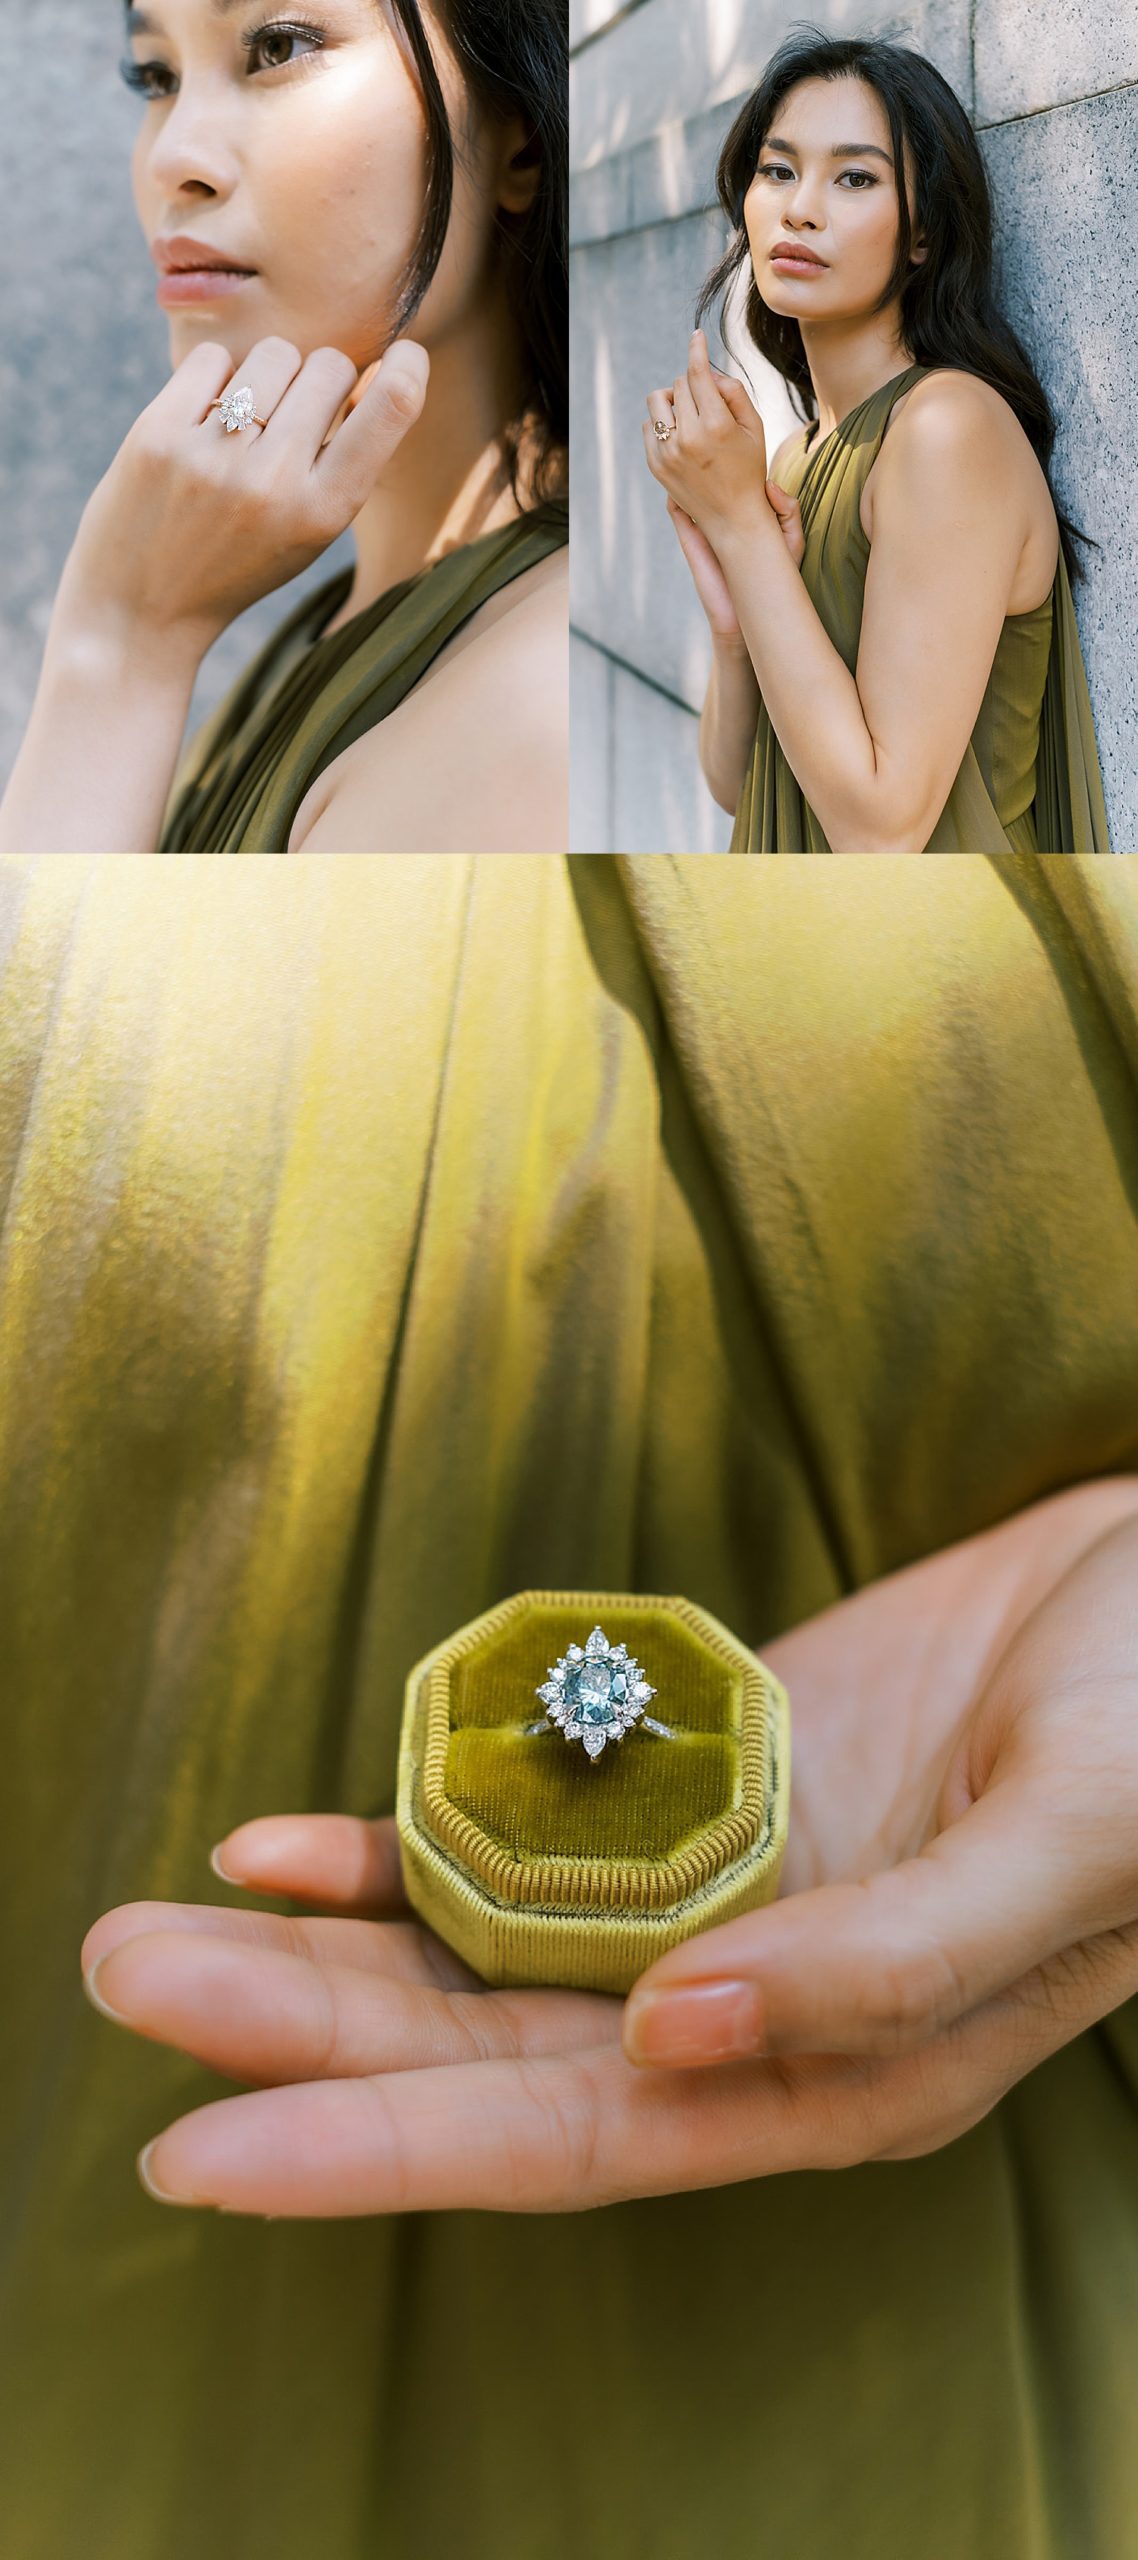 model wearing olive green dress showing off teal blue diamond 